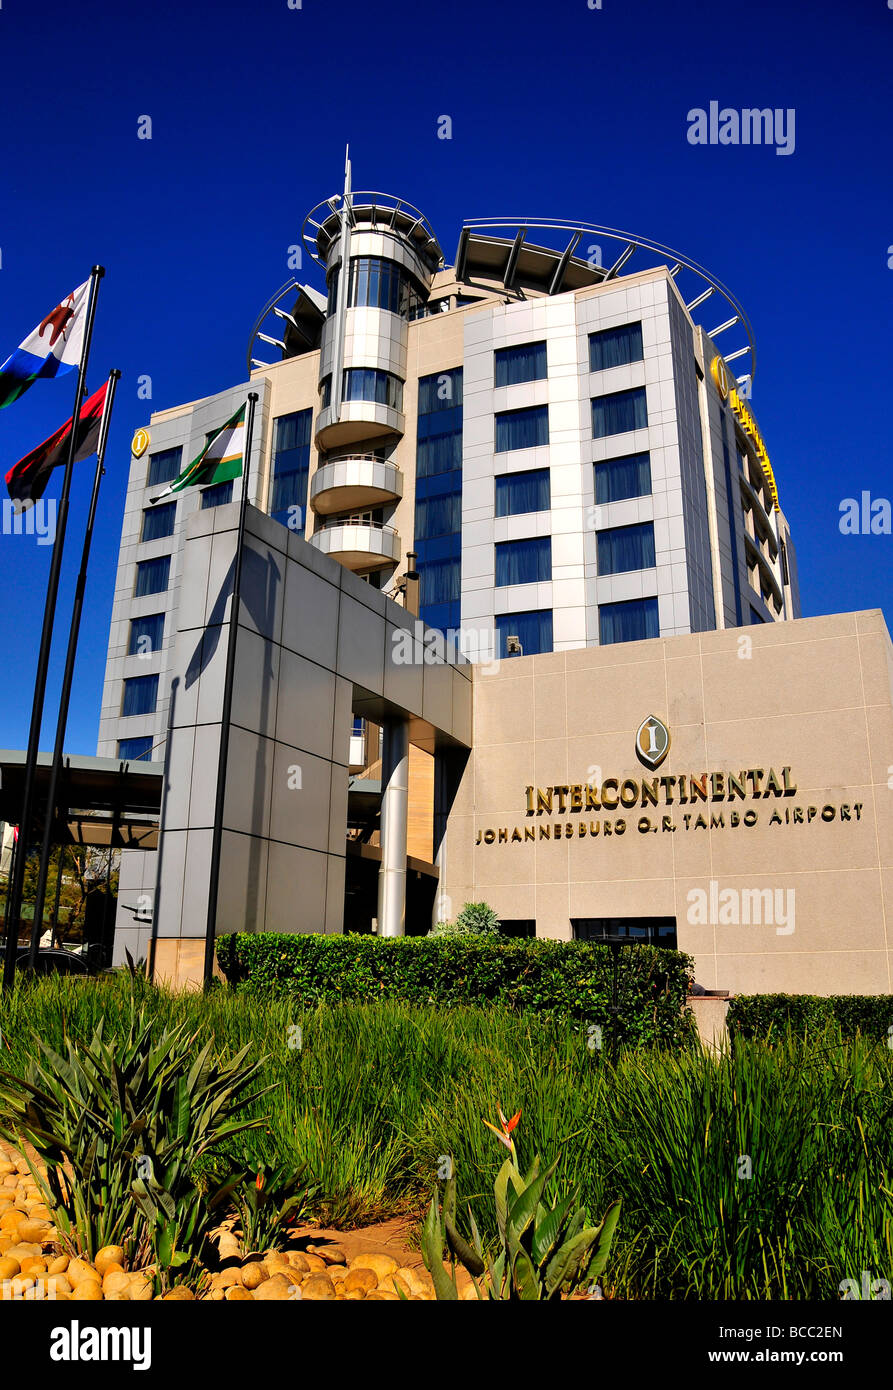 Hôtel Intercontinental Johannesburg O.R. Tambo Airport , Afrique du Sud, Banque D'Images